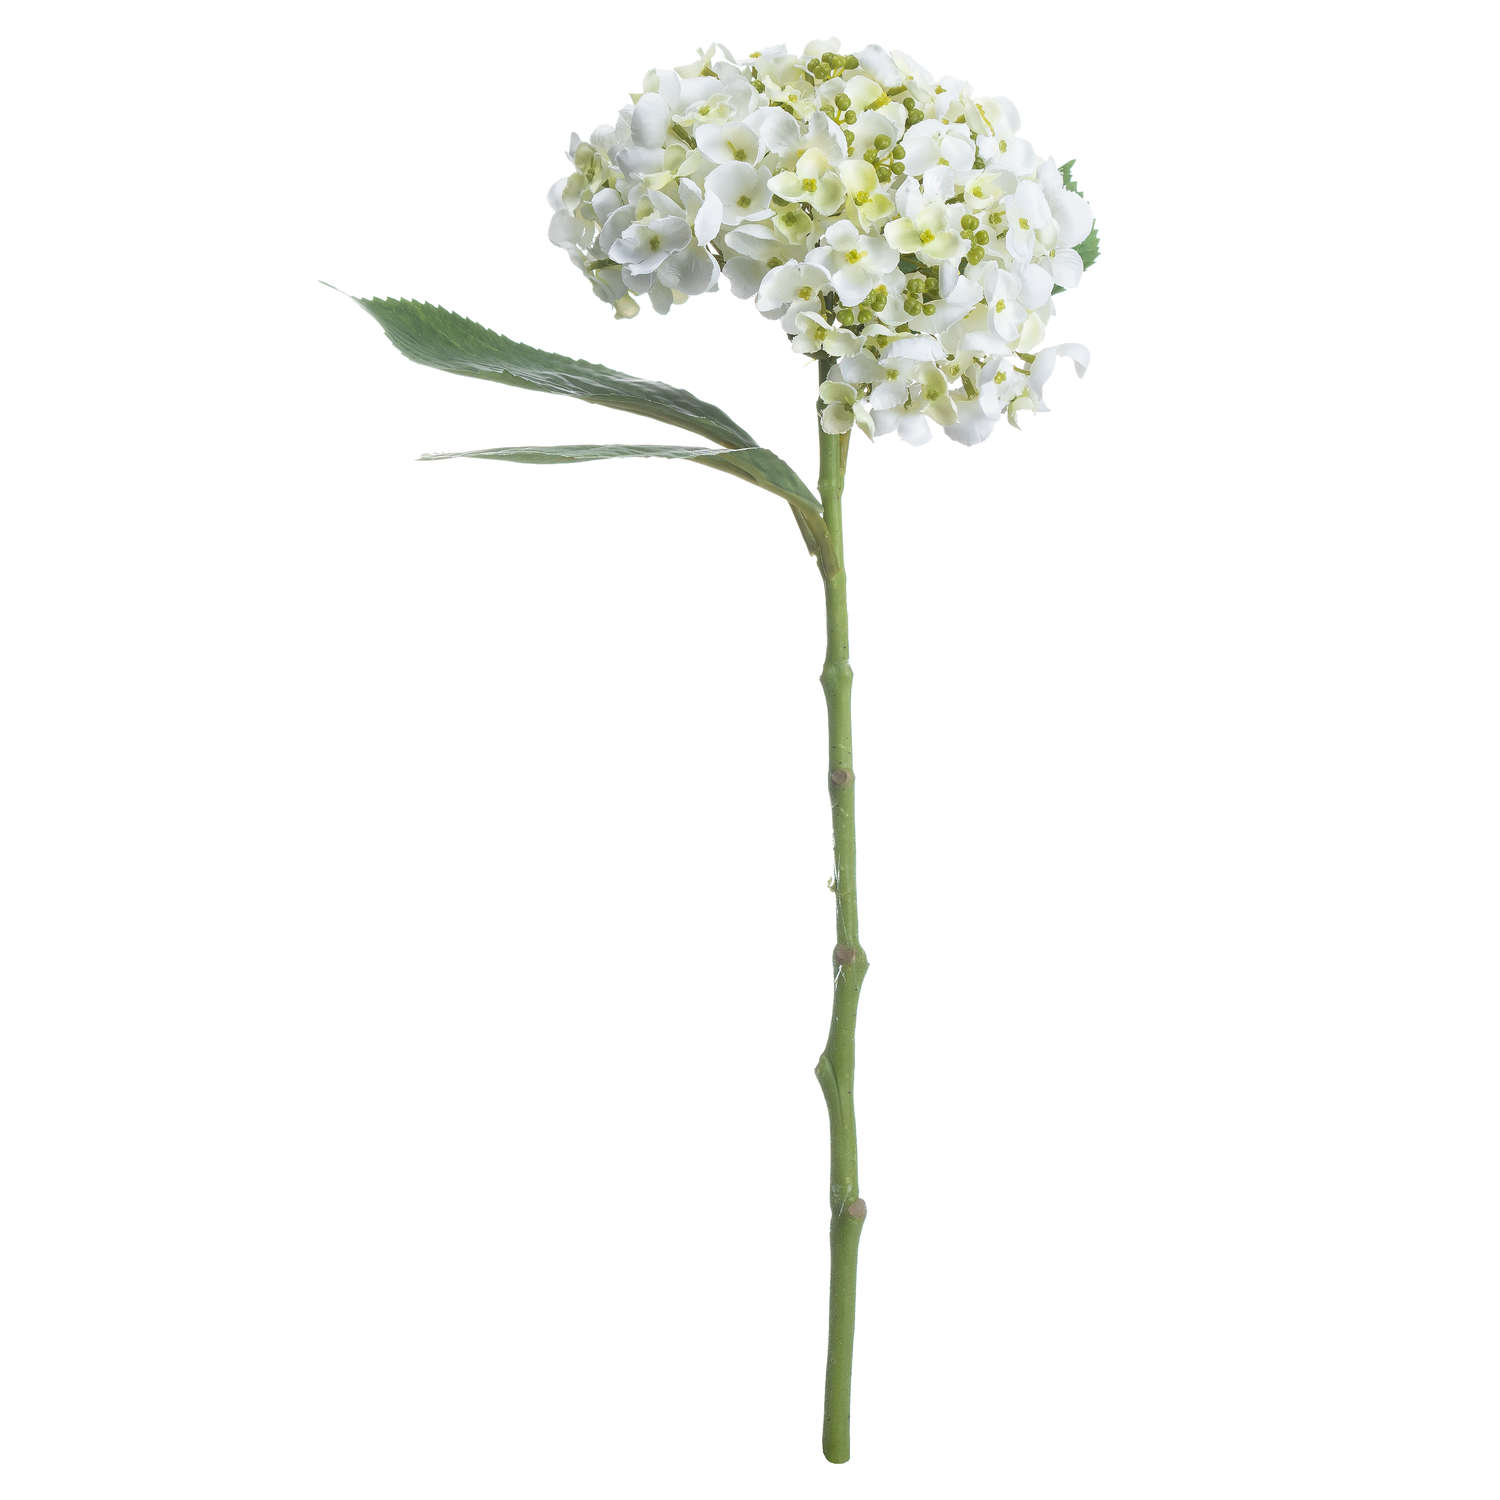 White Lace Cap Hydrangea - Image 3